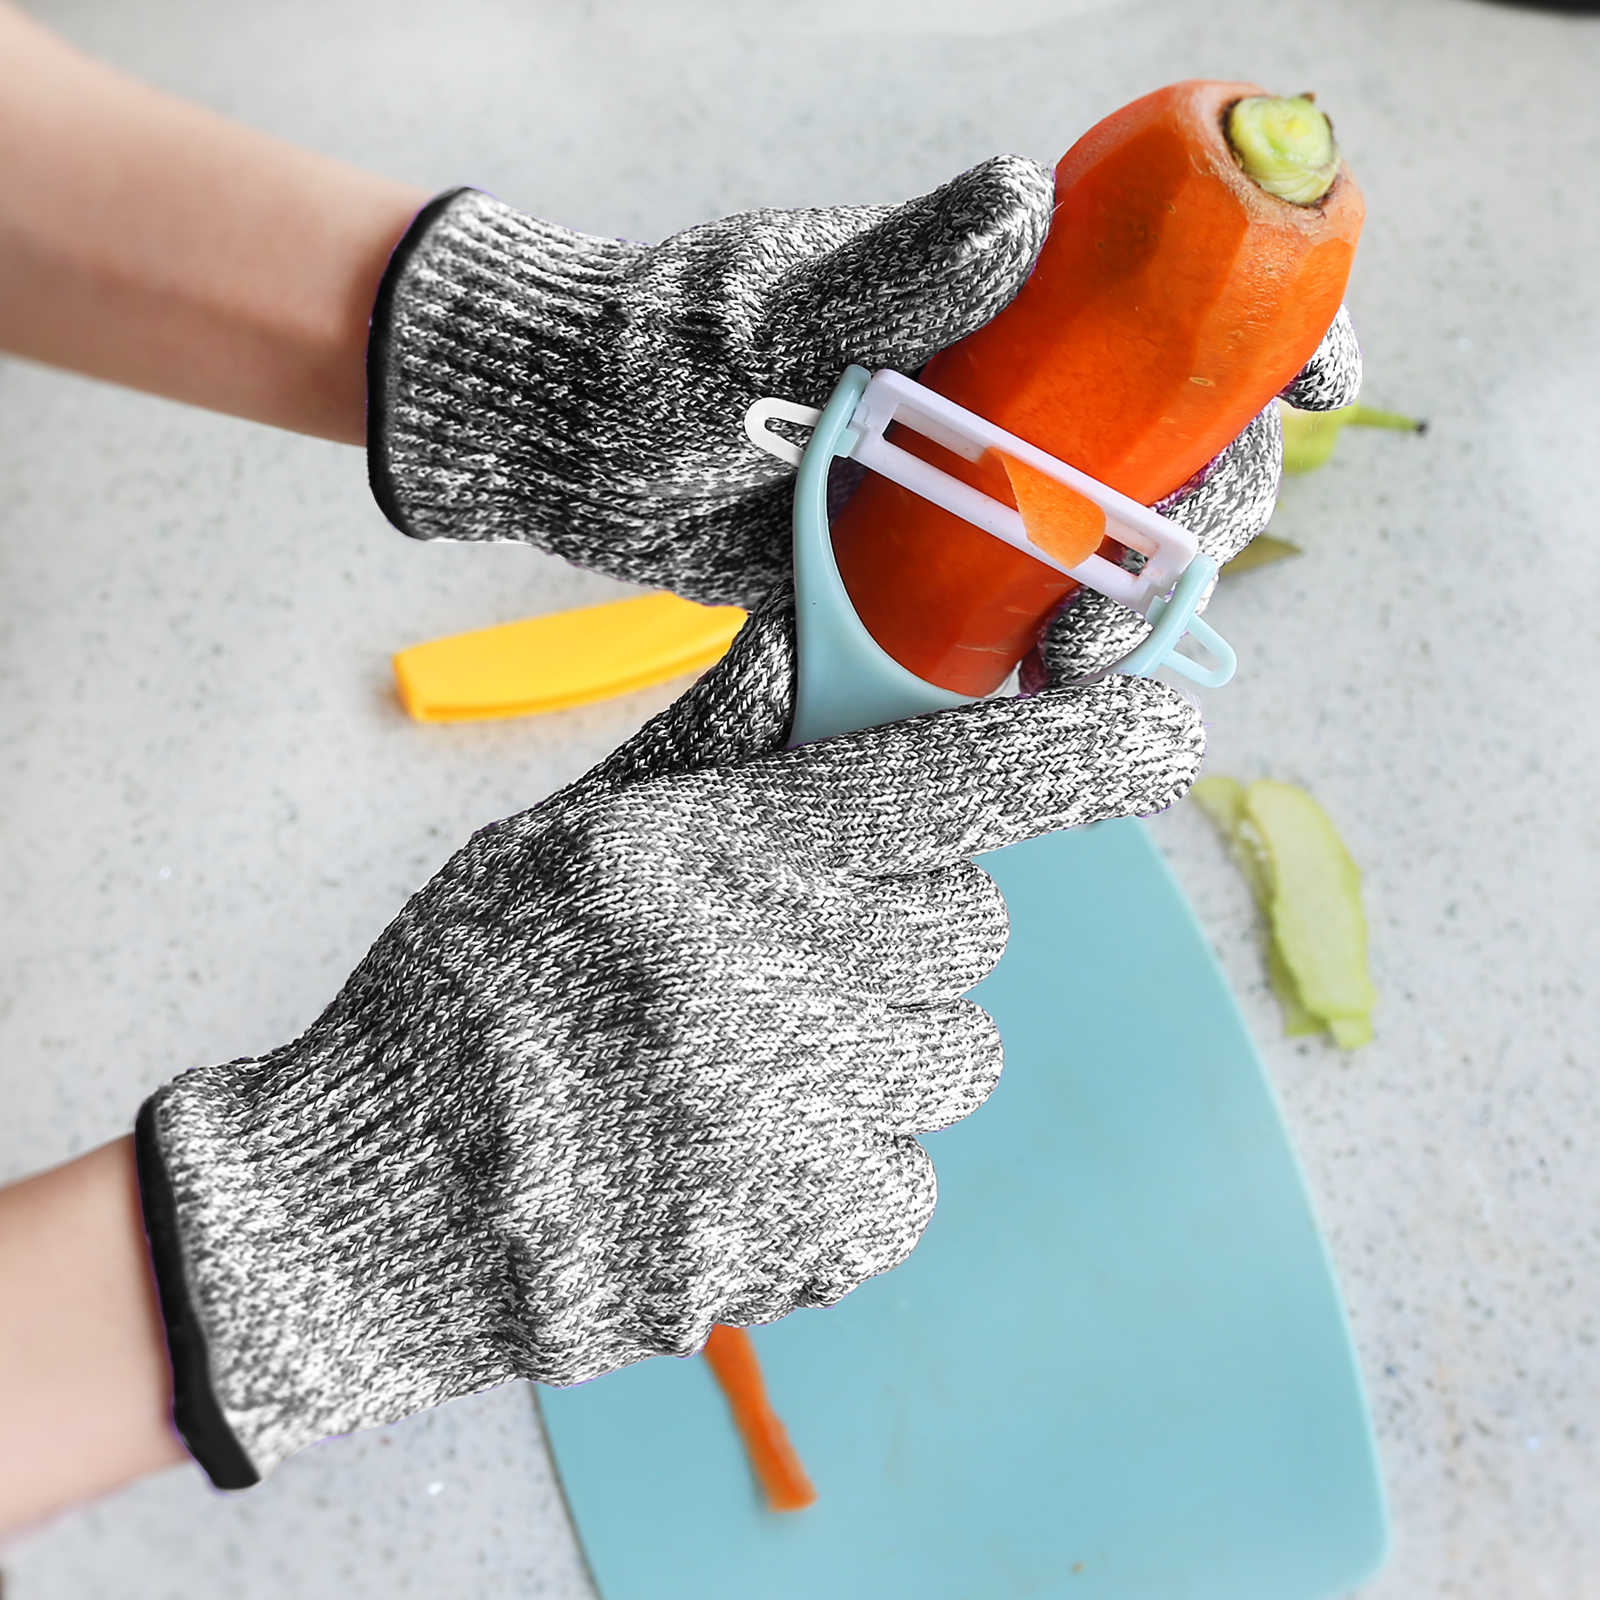 EvridWear Children Kids Gardening Latex Painting Work Gloves for